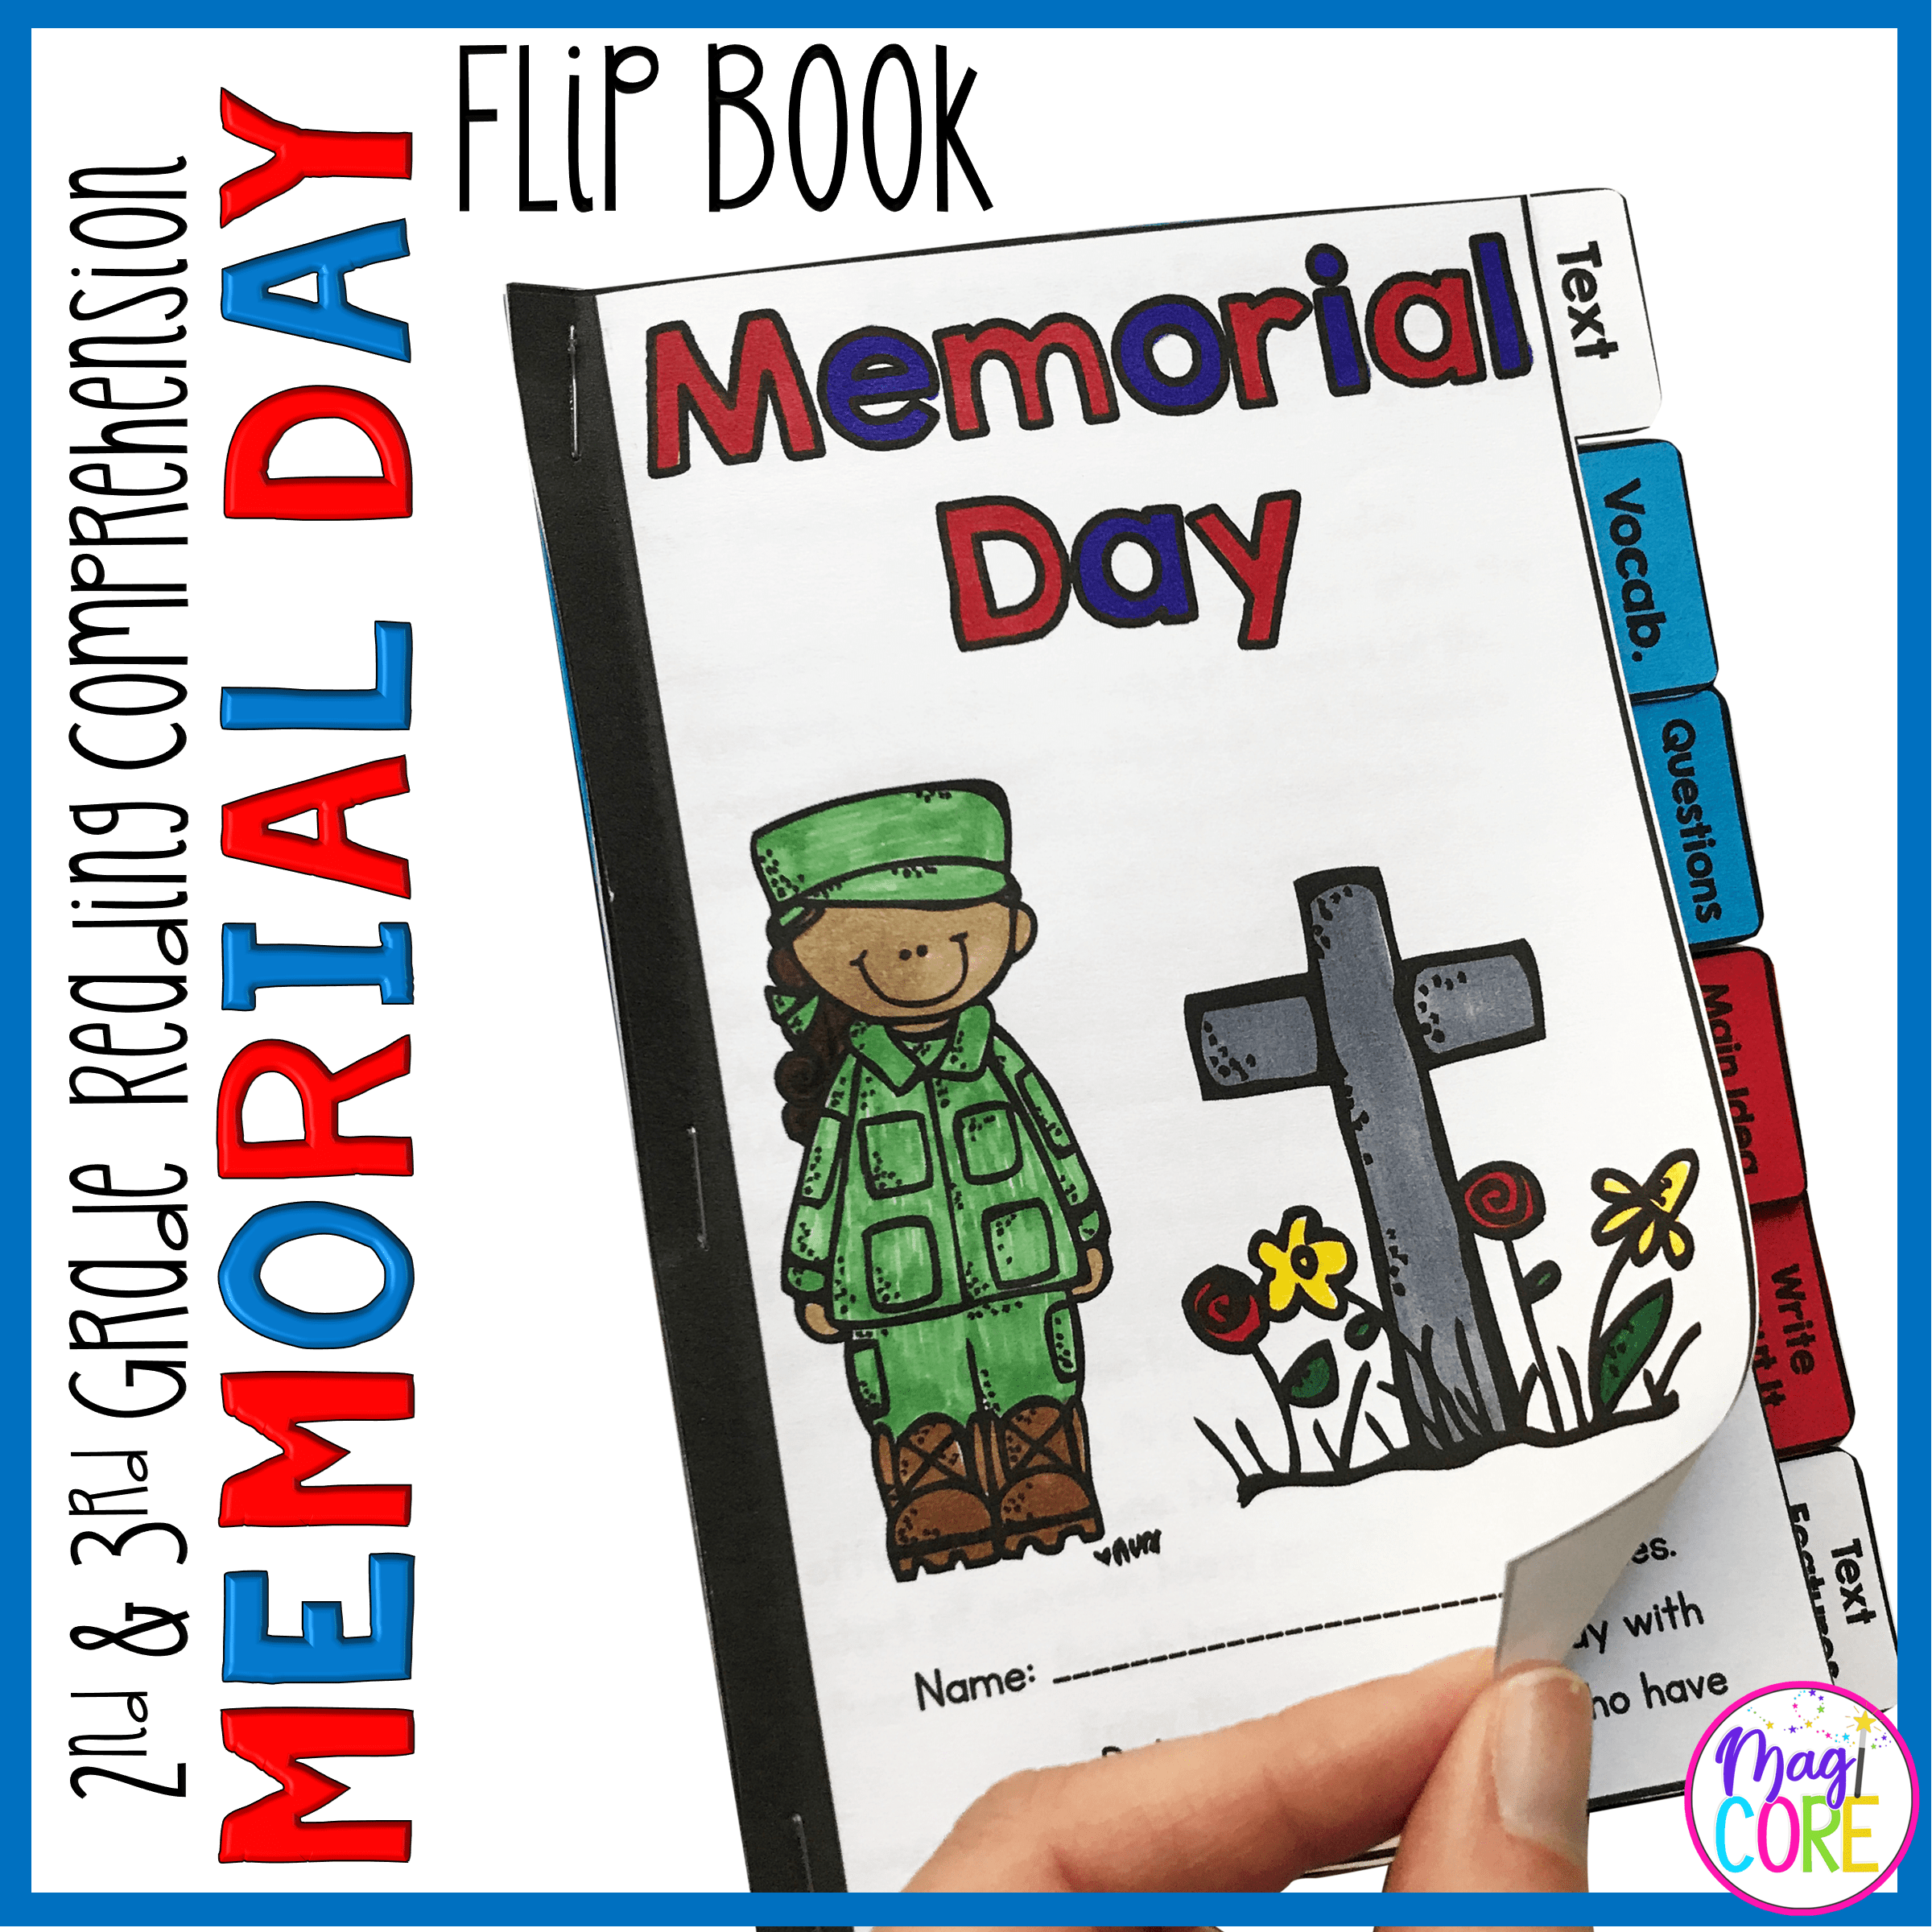 Memorial Day Reading Comprehension Flip Book Activities - 2nd & 3rd grade